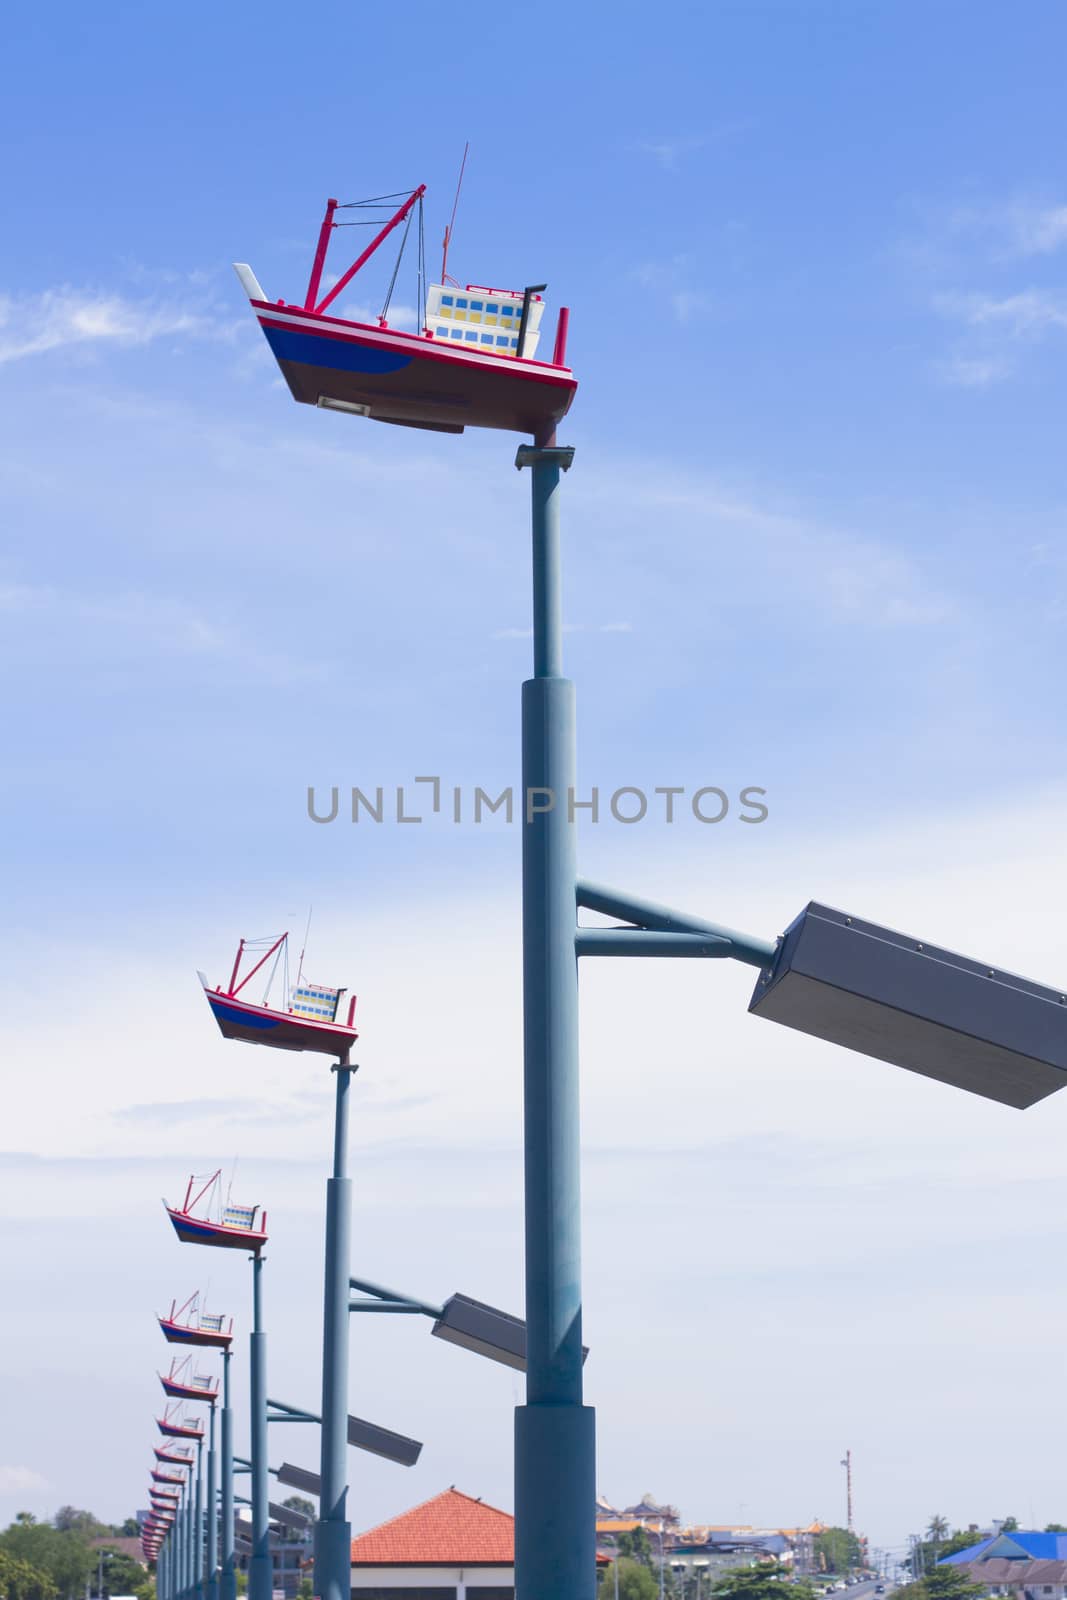 Lighting mast ship on a background of blue sky.